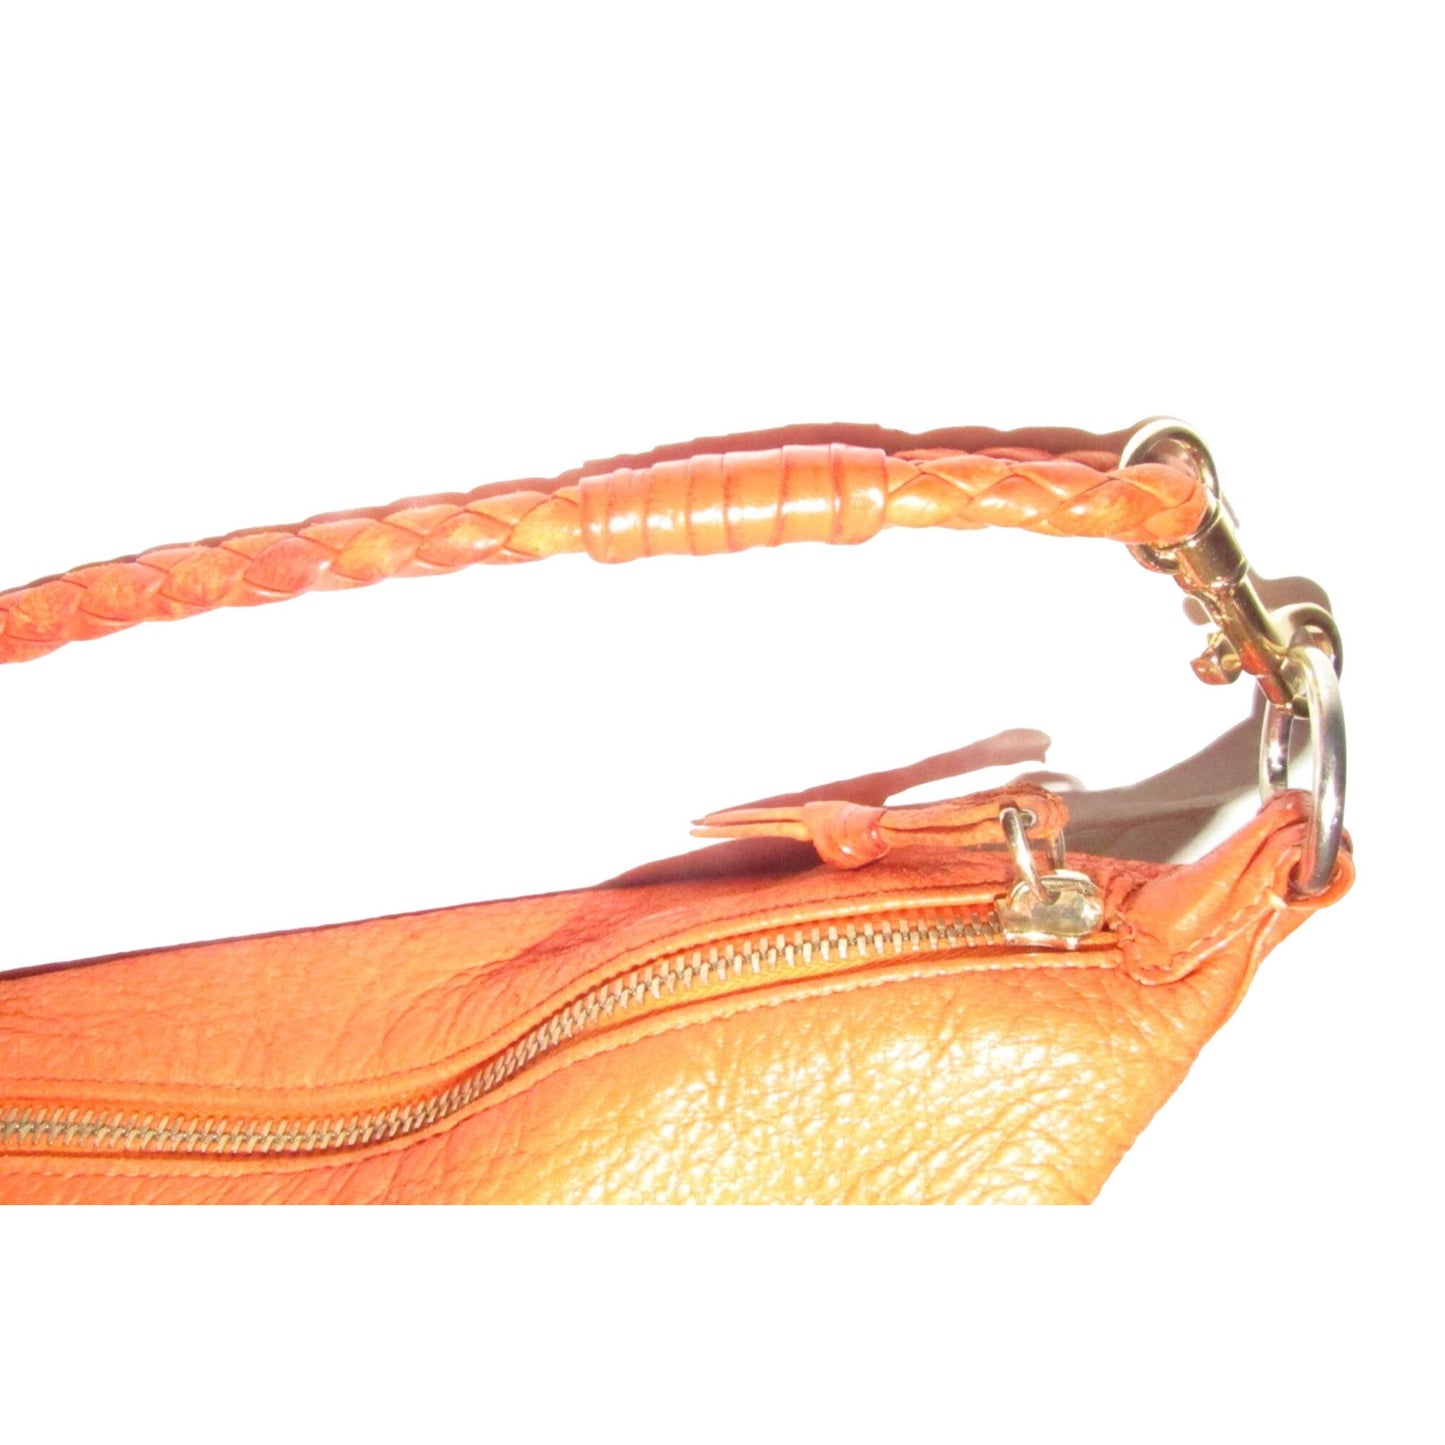 High- end bohemian, RARE, Bottega Veneta, orange leather with a braided leather strap and trim, satchel style, bucket purse